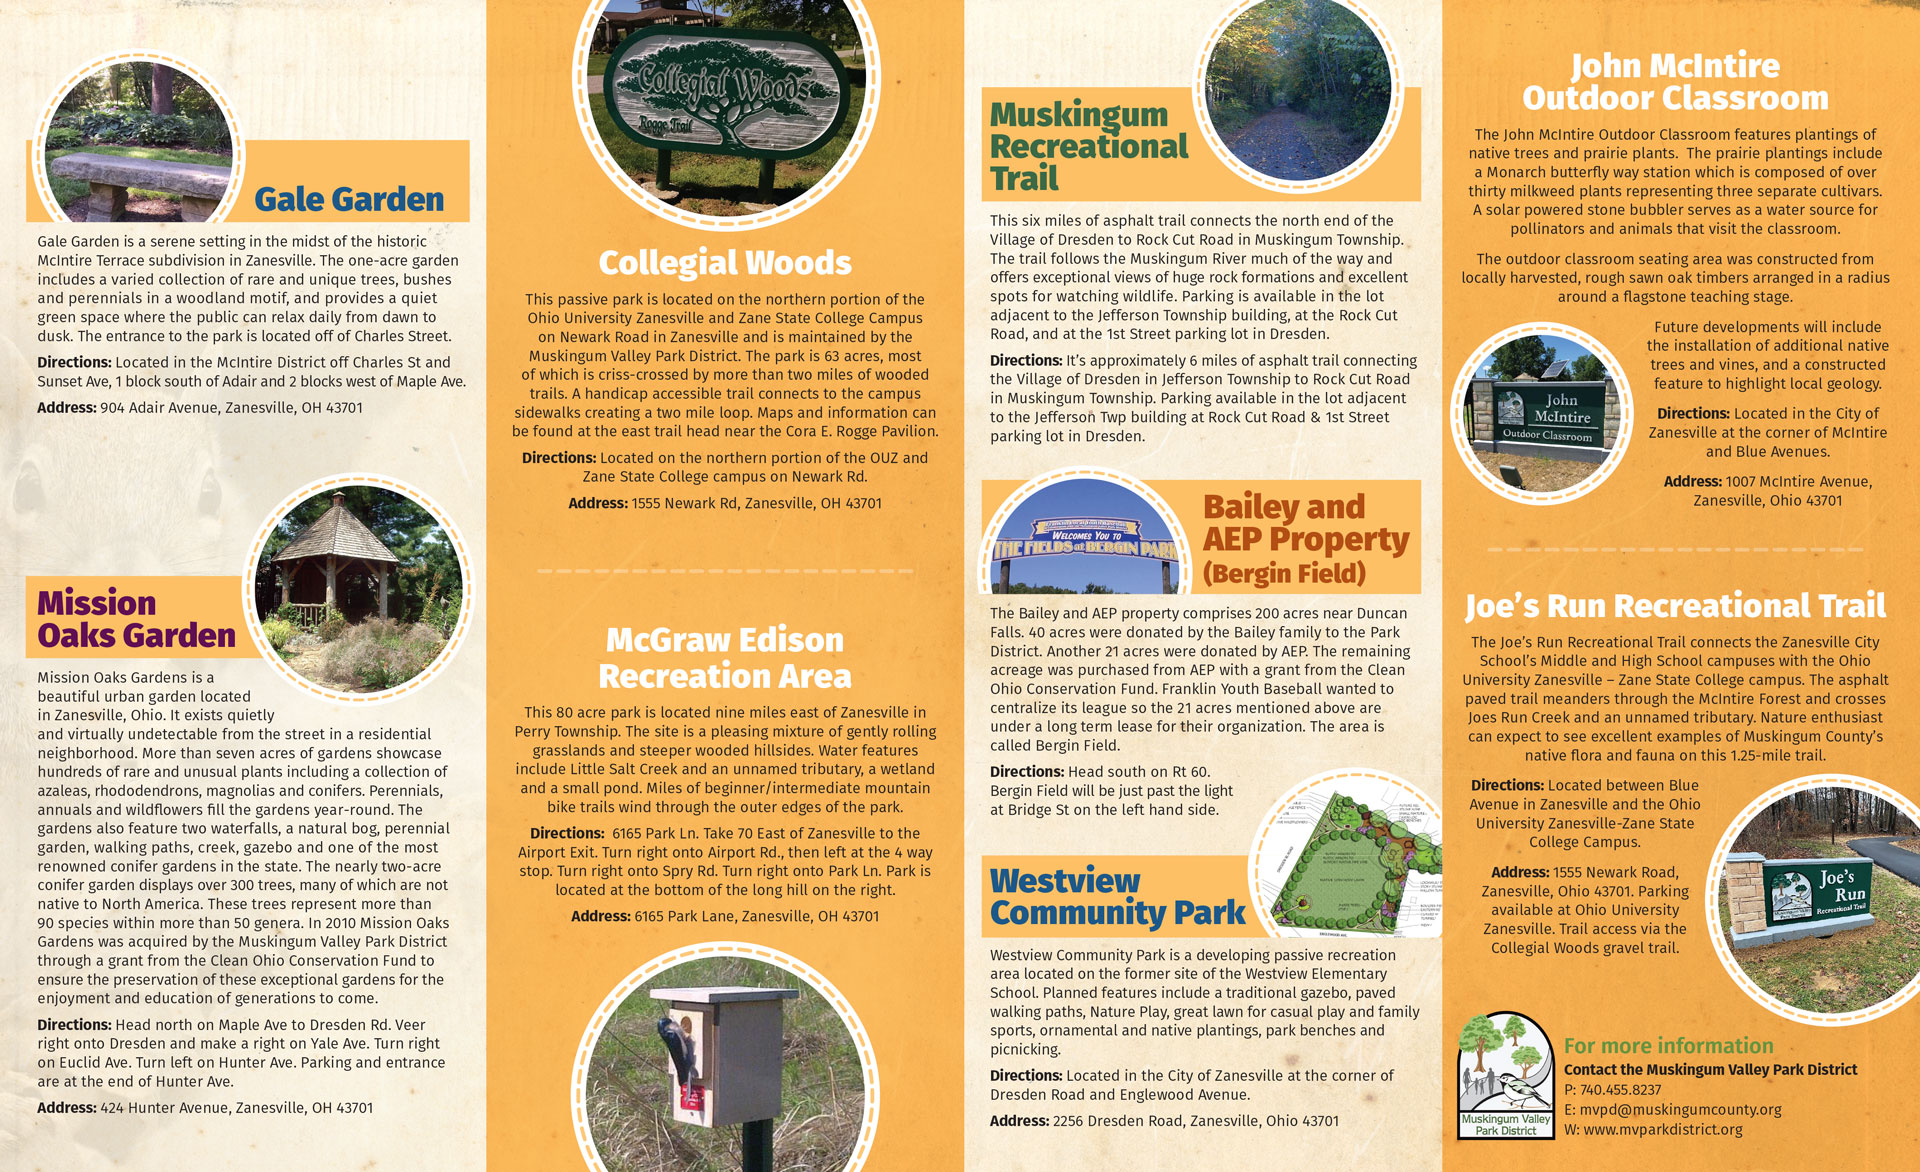 Muskingum Valley Park District Guide